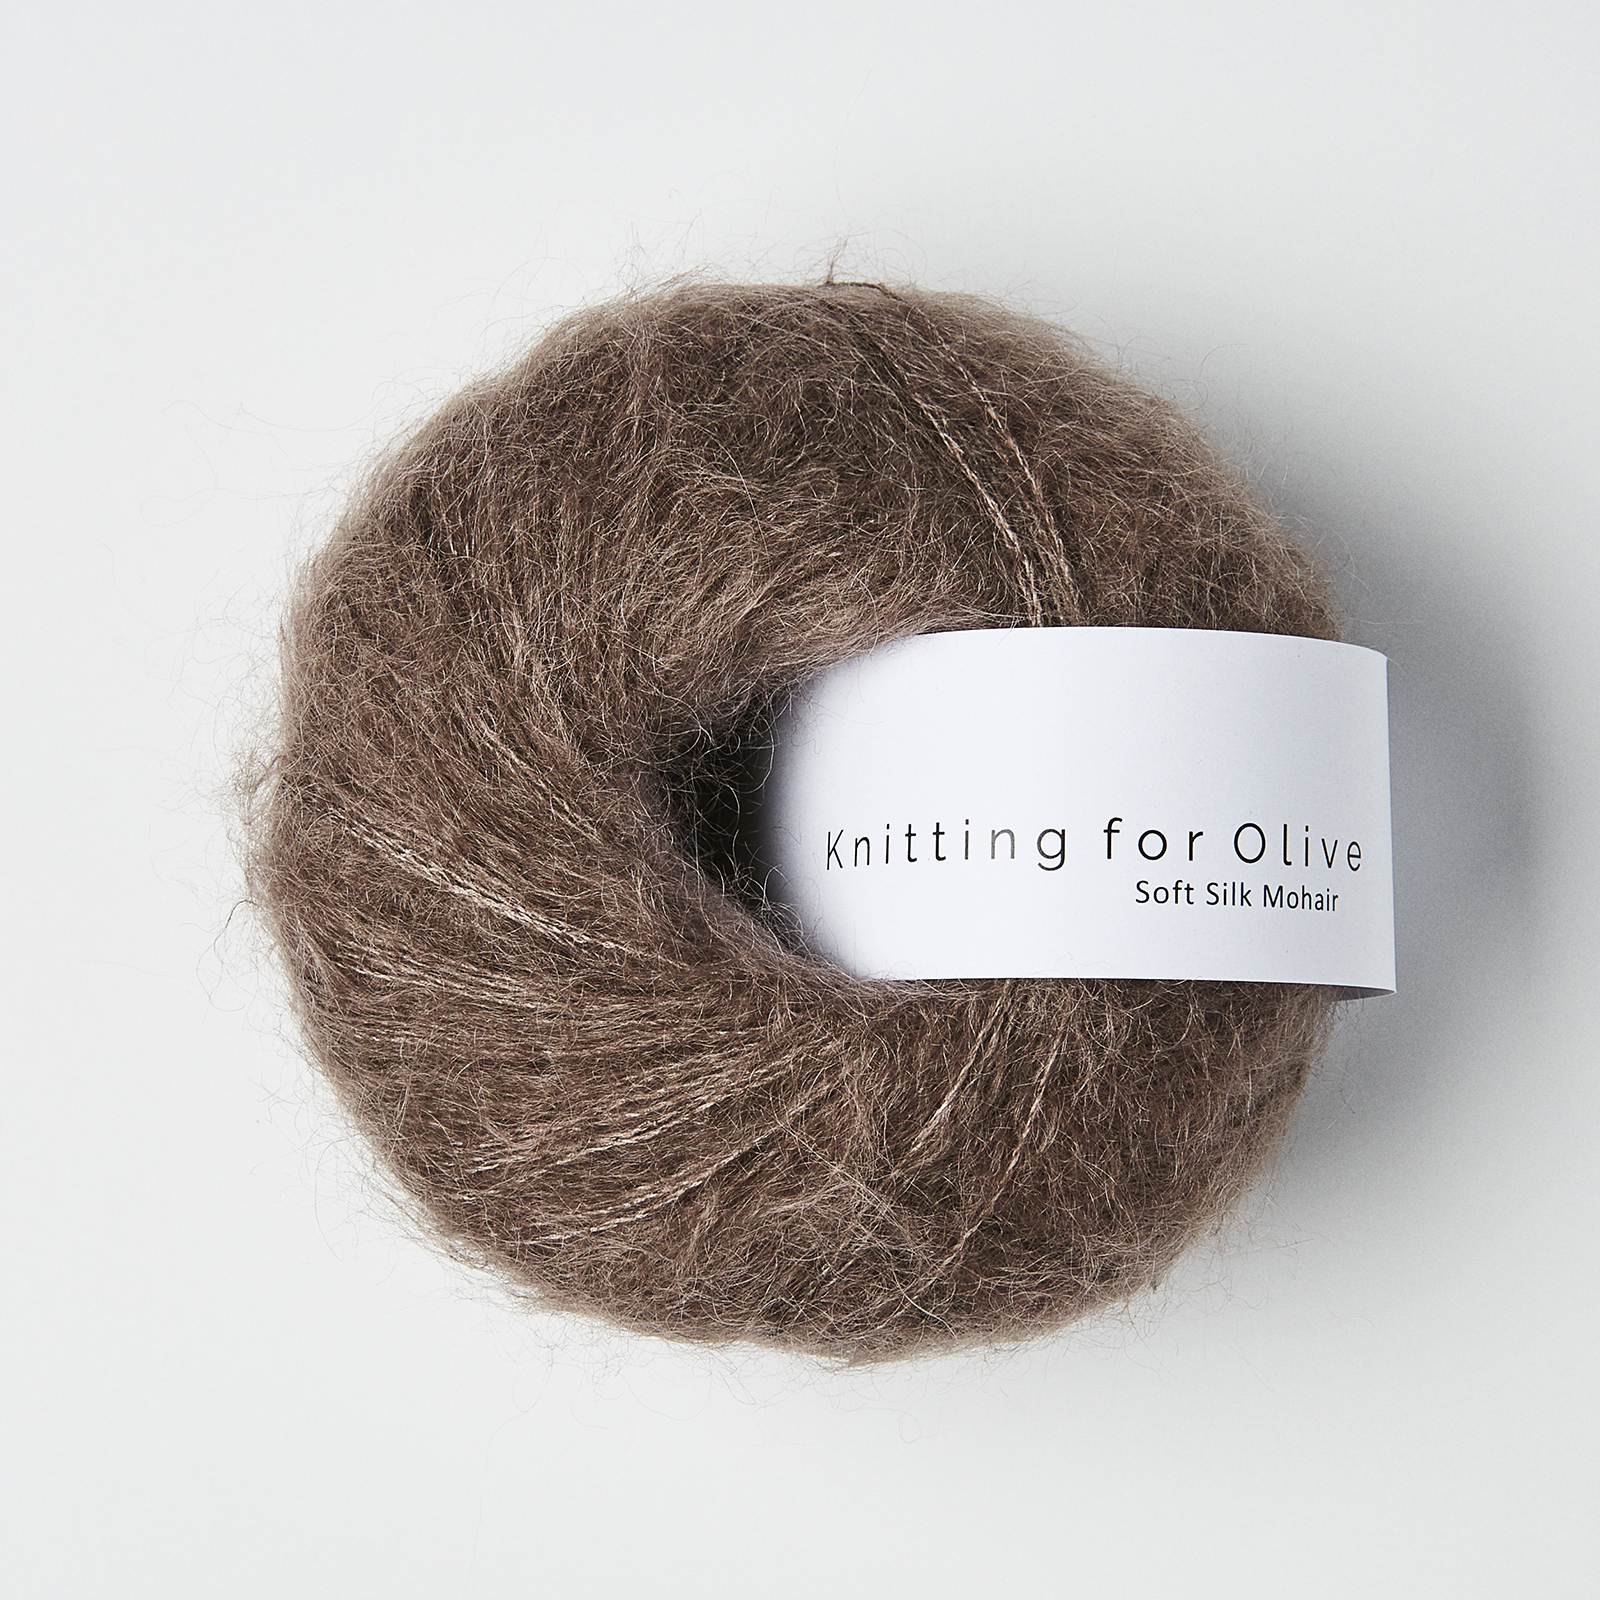 soft silk mohair knitting for olive | soft silk mohair: plum clay